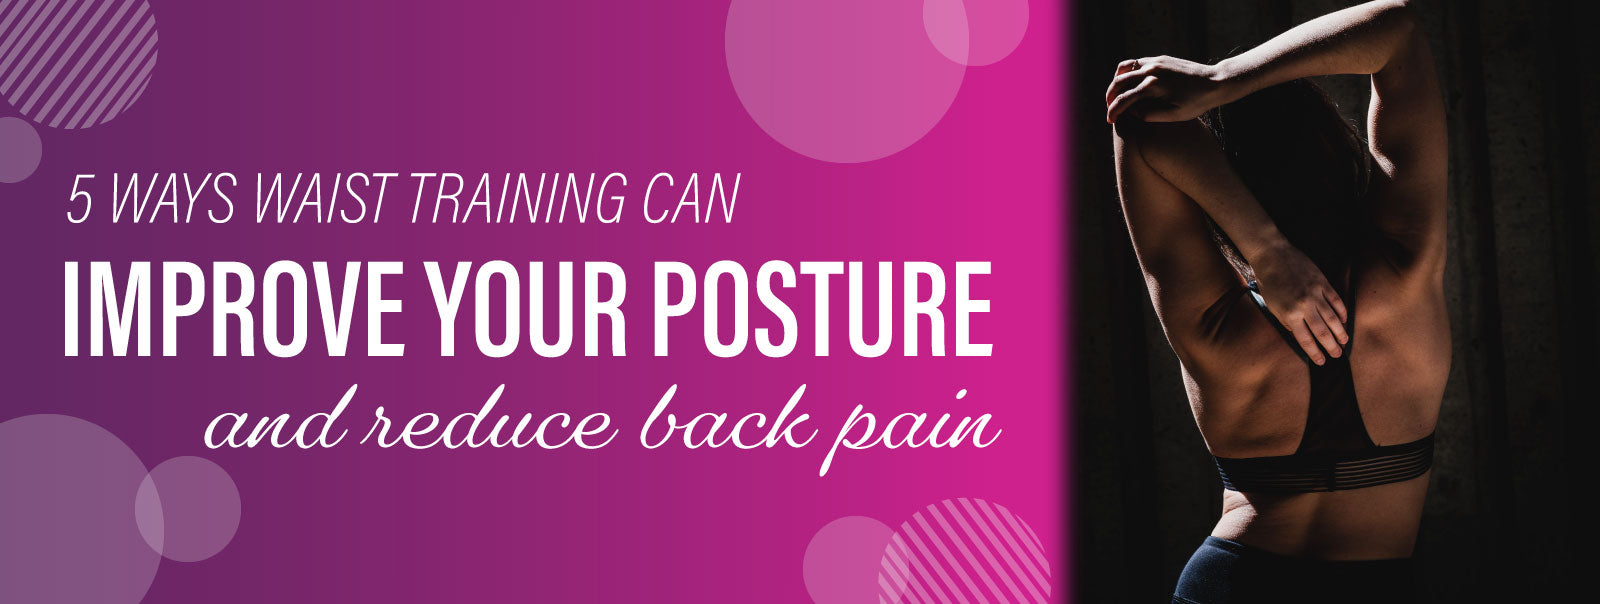 How Does Waist Training Improve your Posture? | Waist Training 101